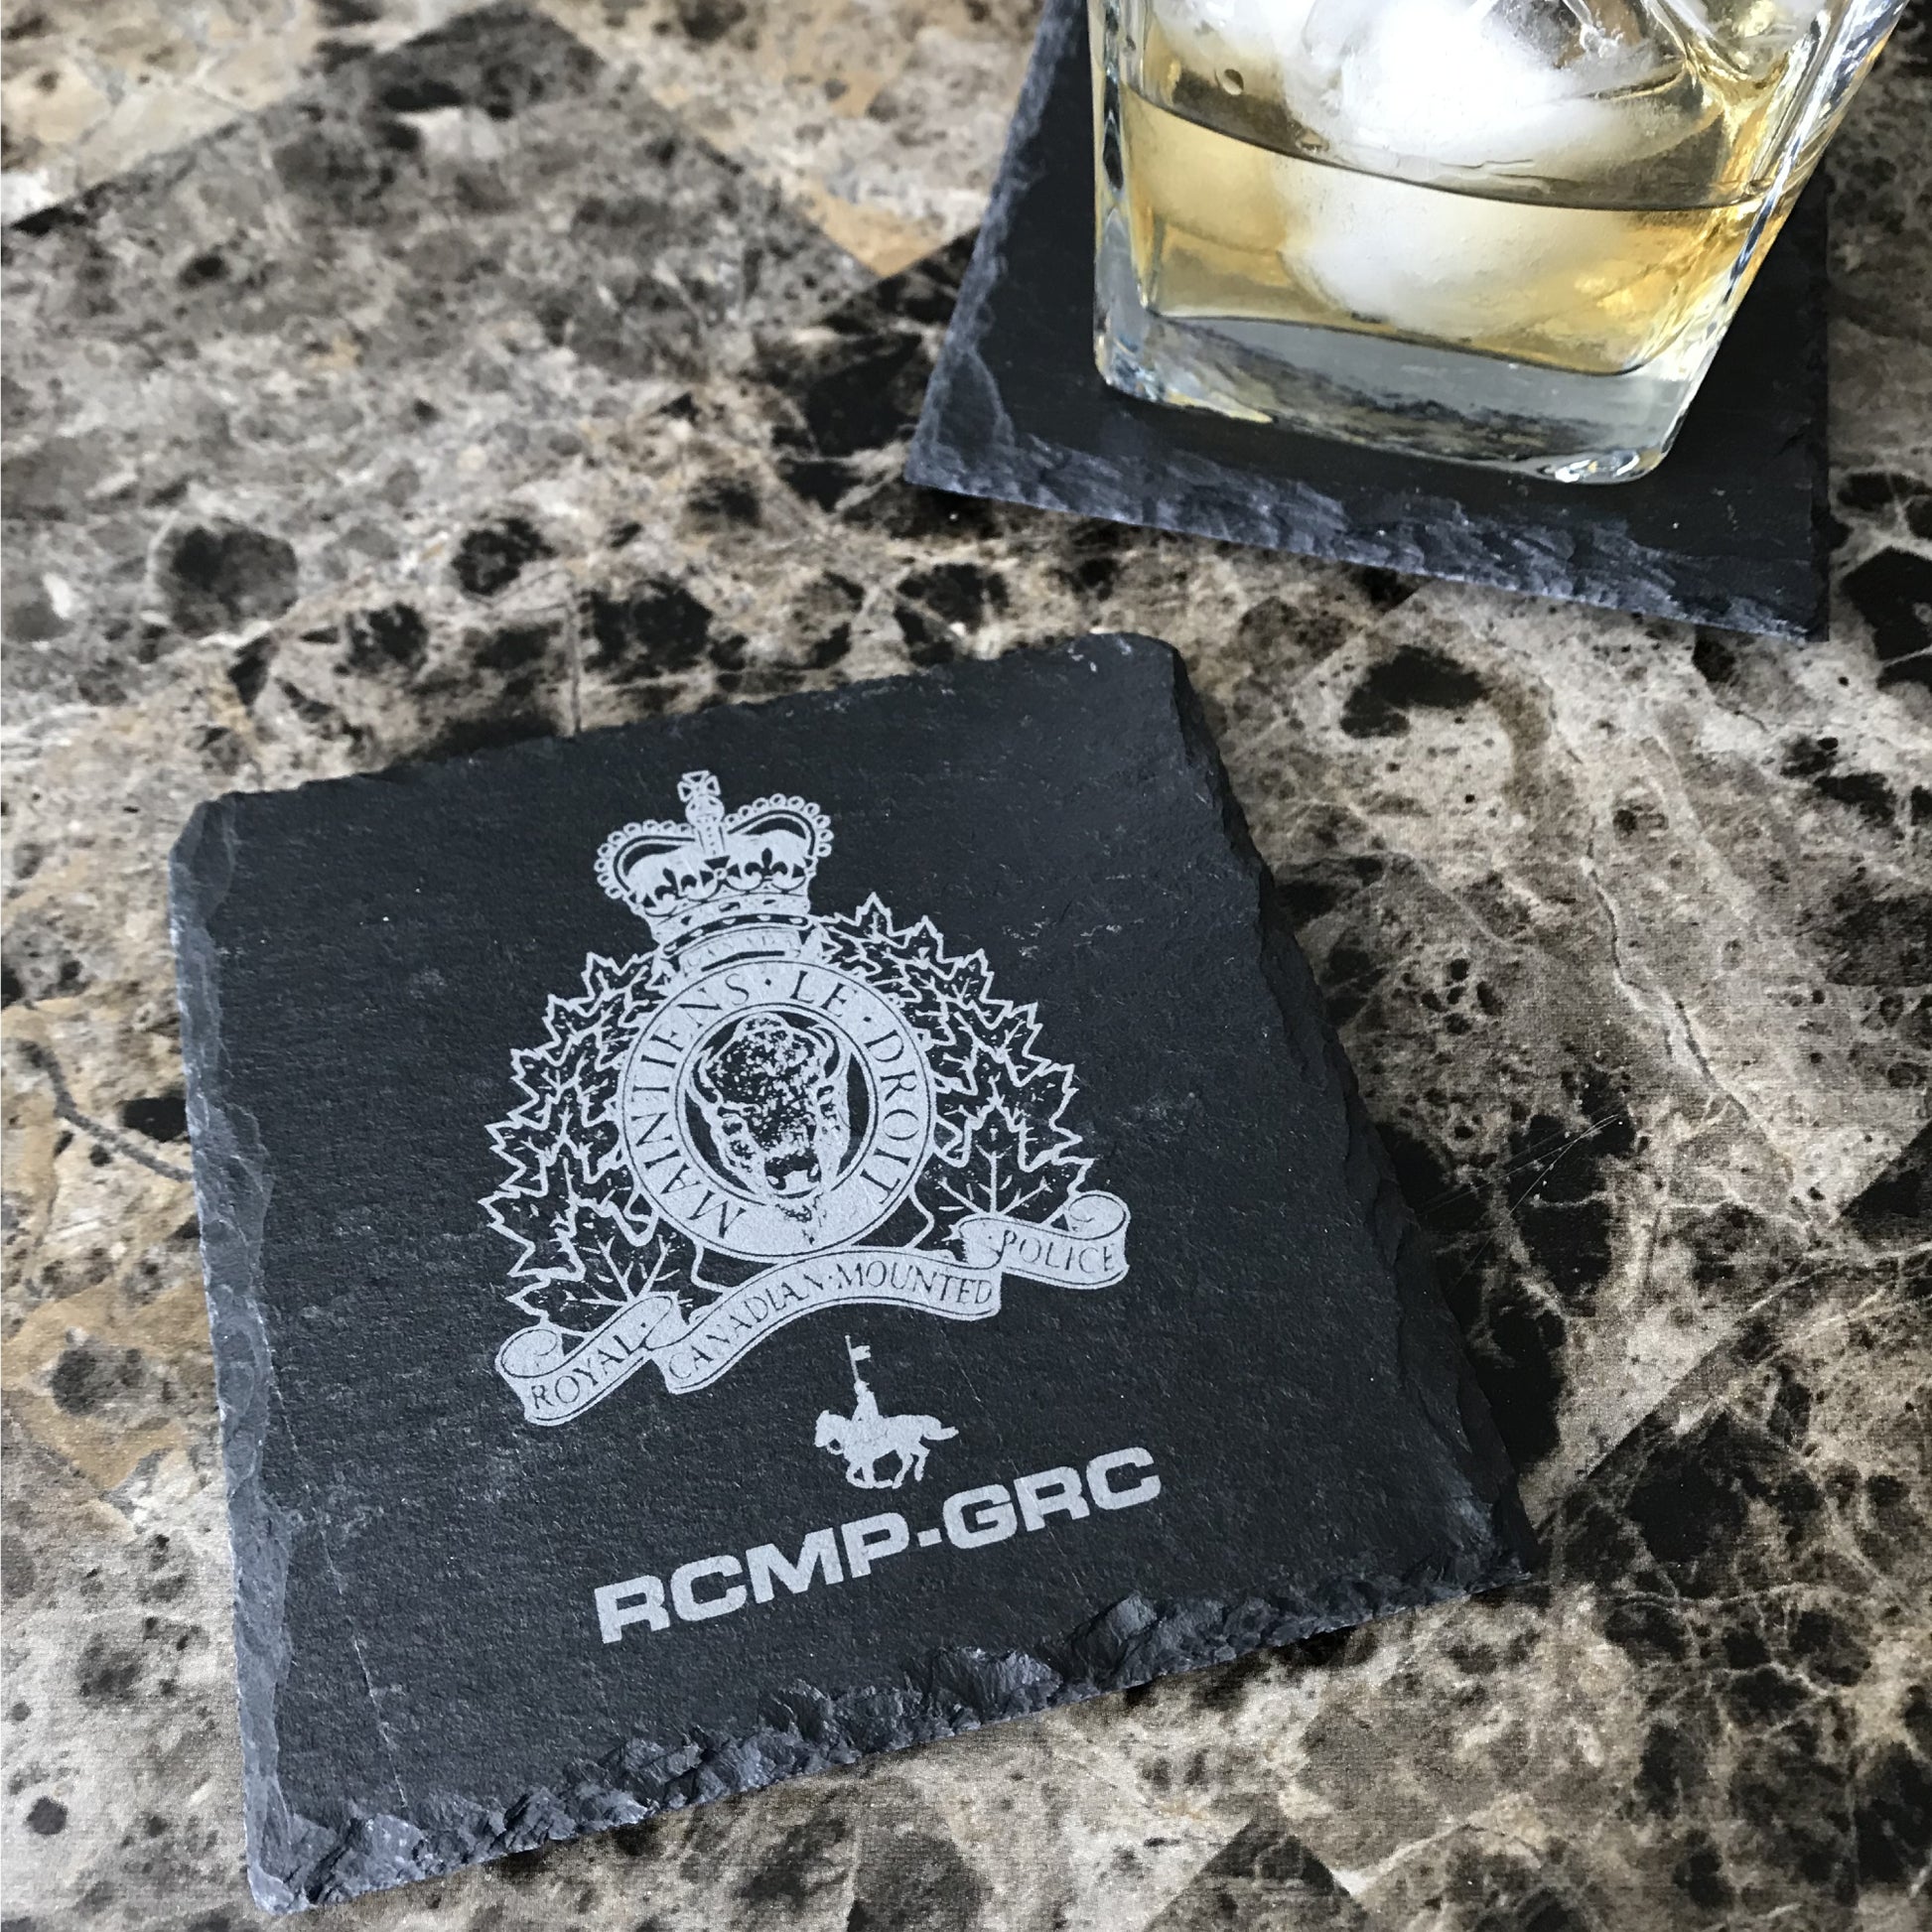 Military Police Stone Slate Coasters-911 Duty Gear-911 Duty Gear Canada